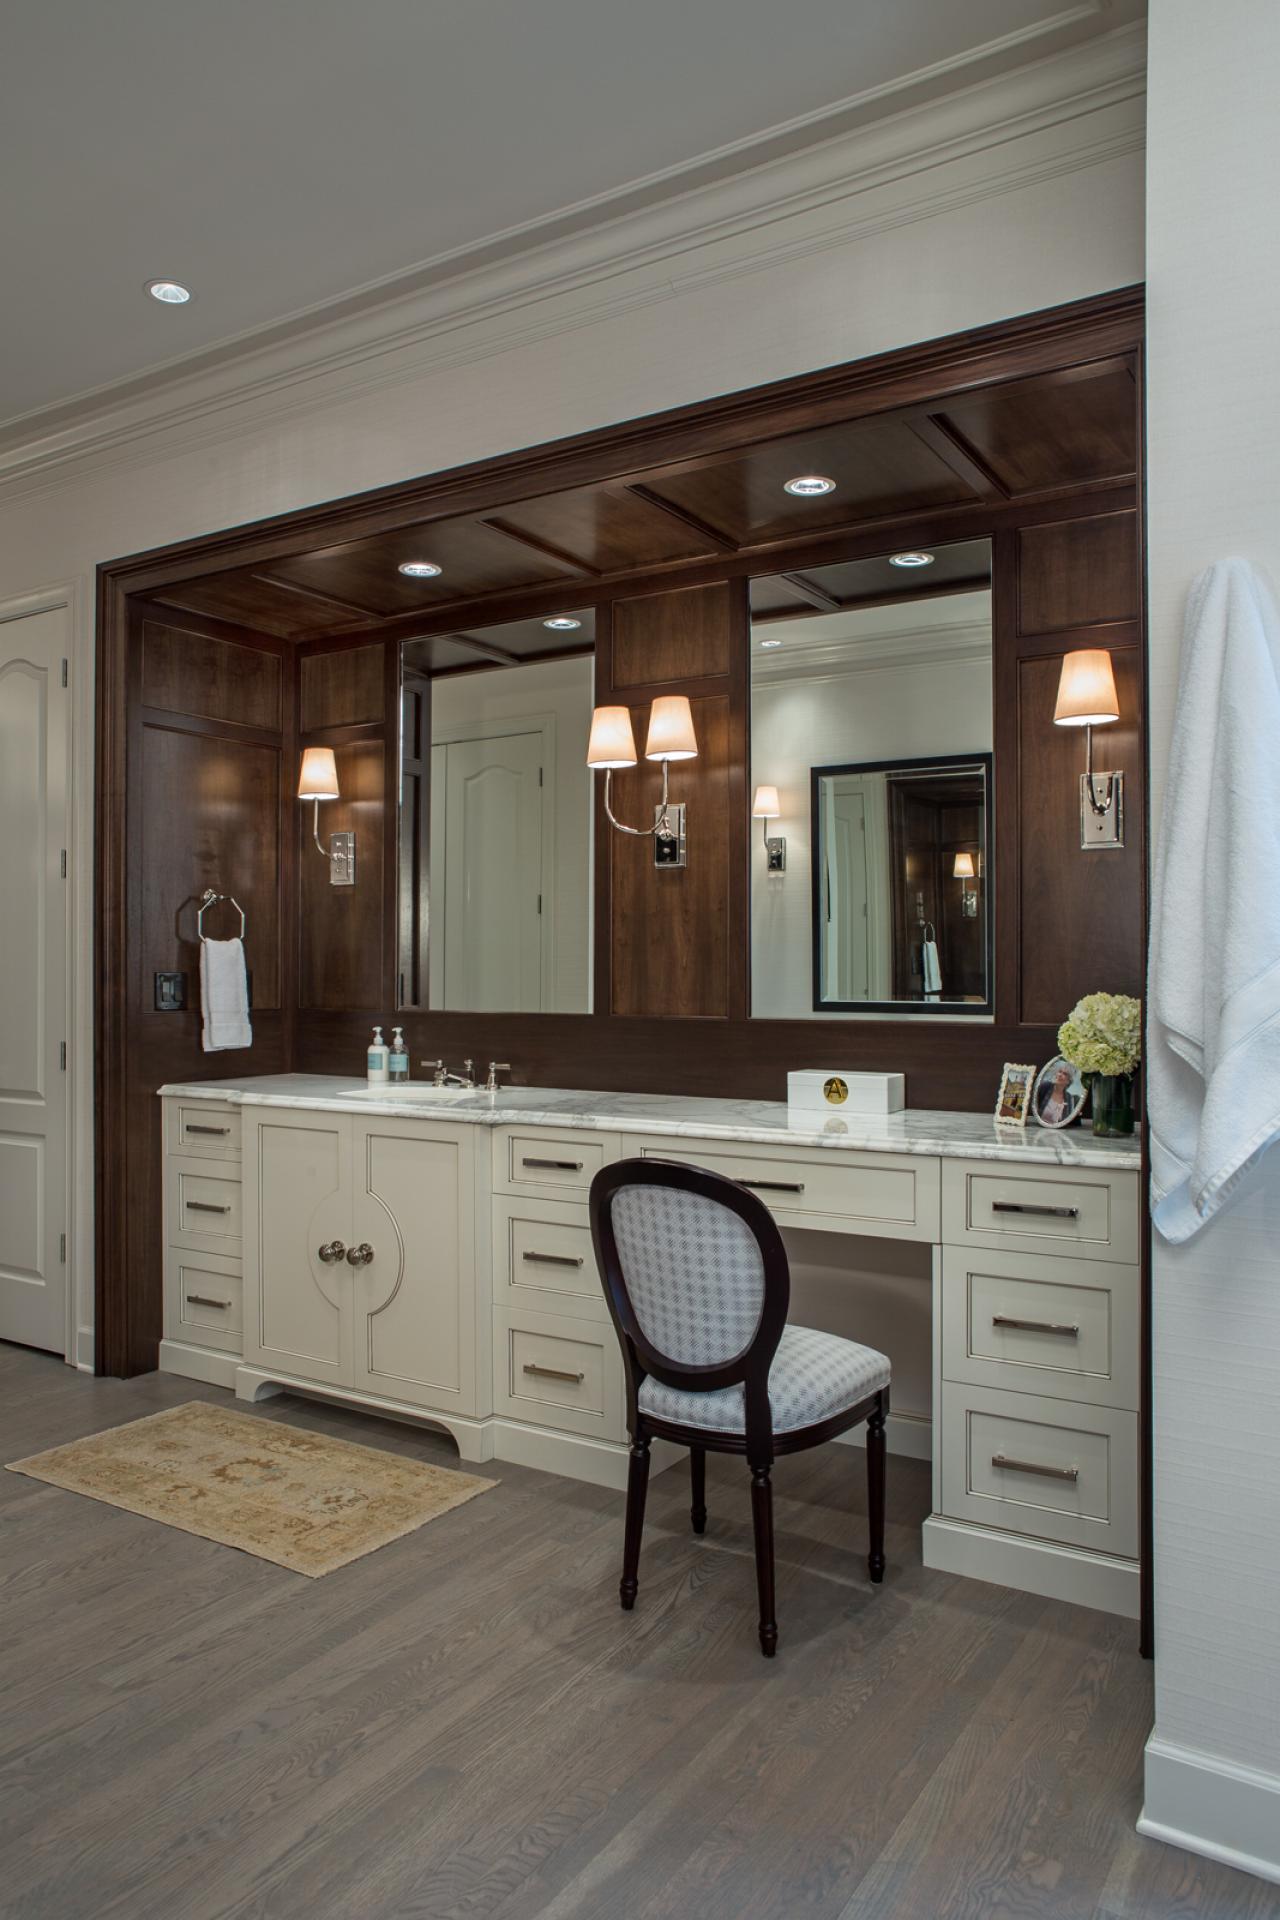 Makeup Vanity Bathroom : Bathroom vanity with makeup area - large and ...